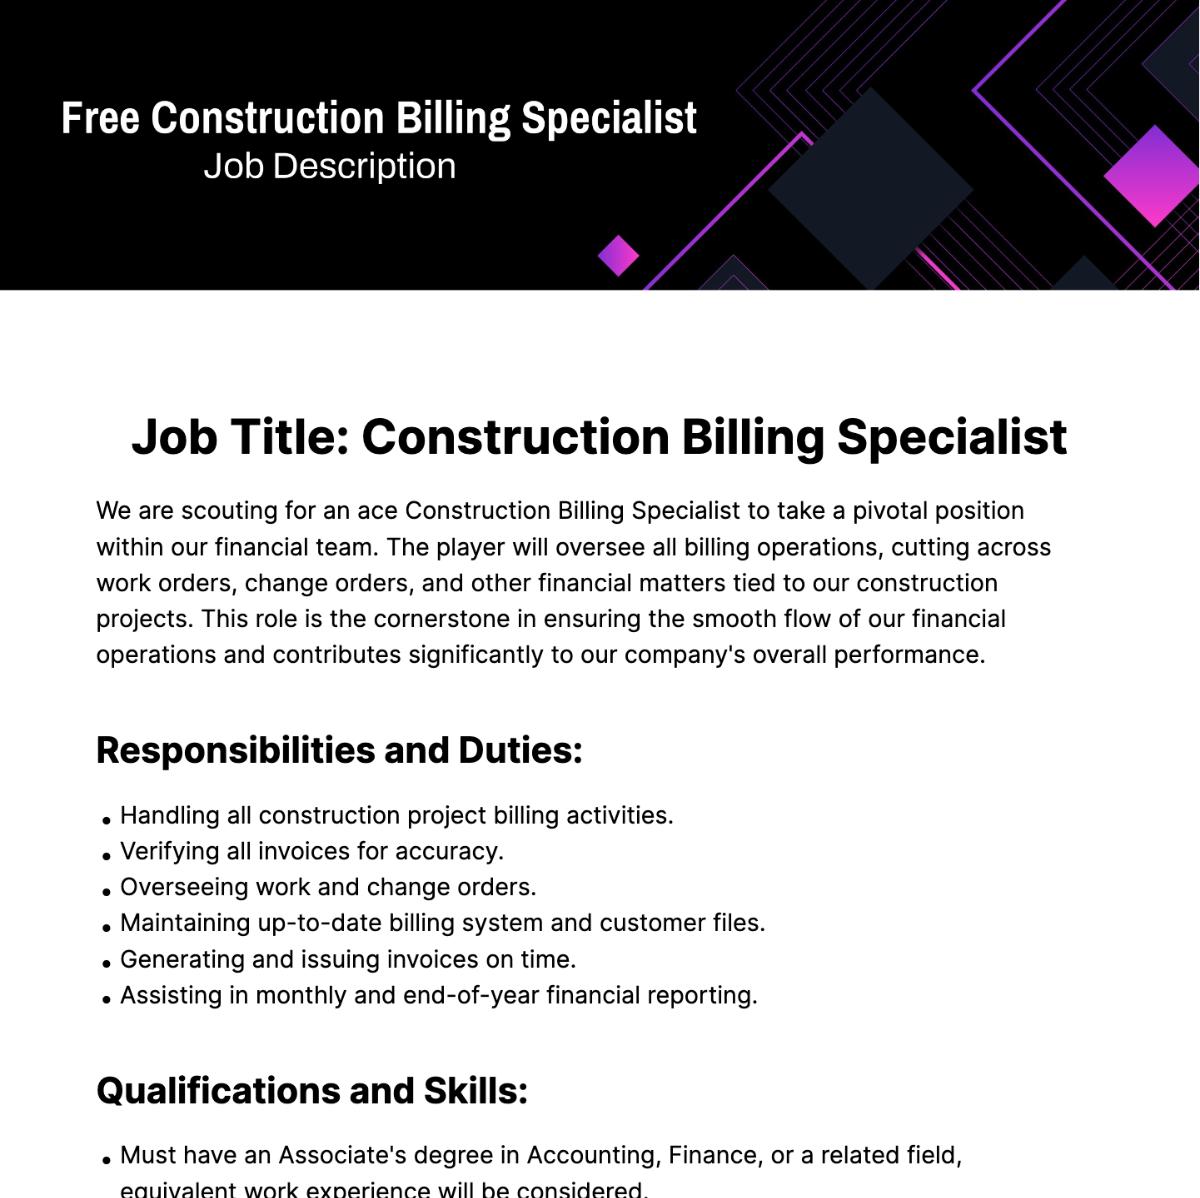 Free Construction Billing Specialist Job Description Template